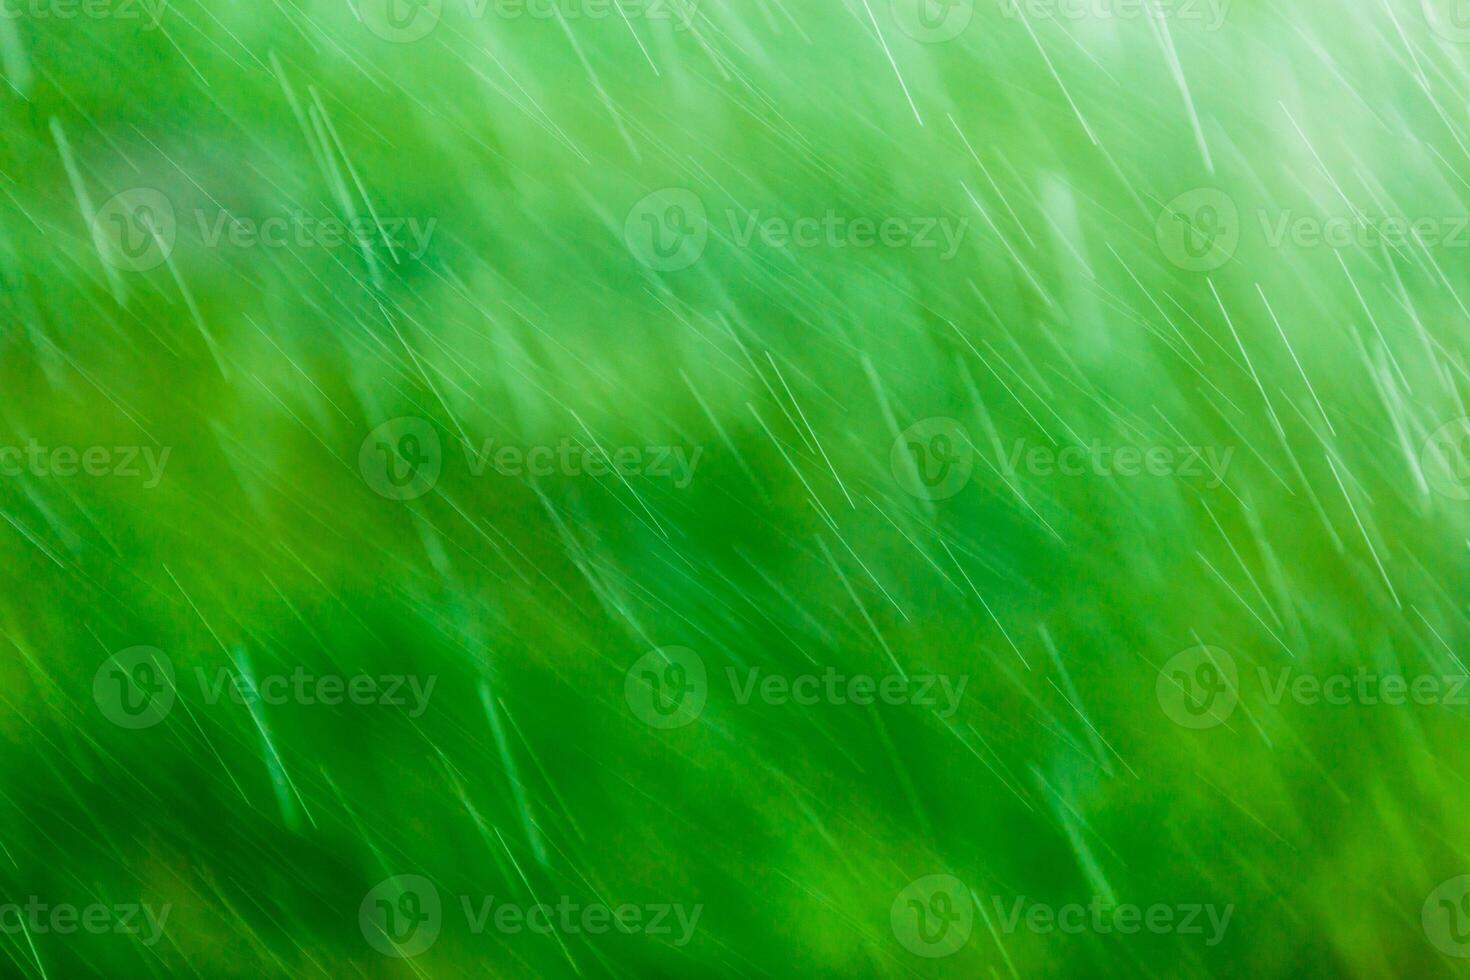 gotas de lluvia que caen borrosas sobre fondo verde con enfoque selectivo foto